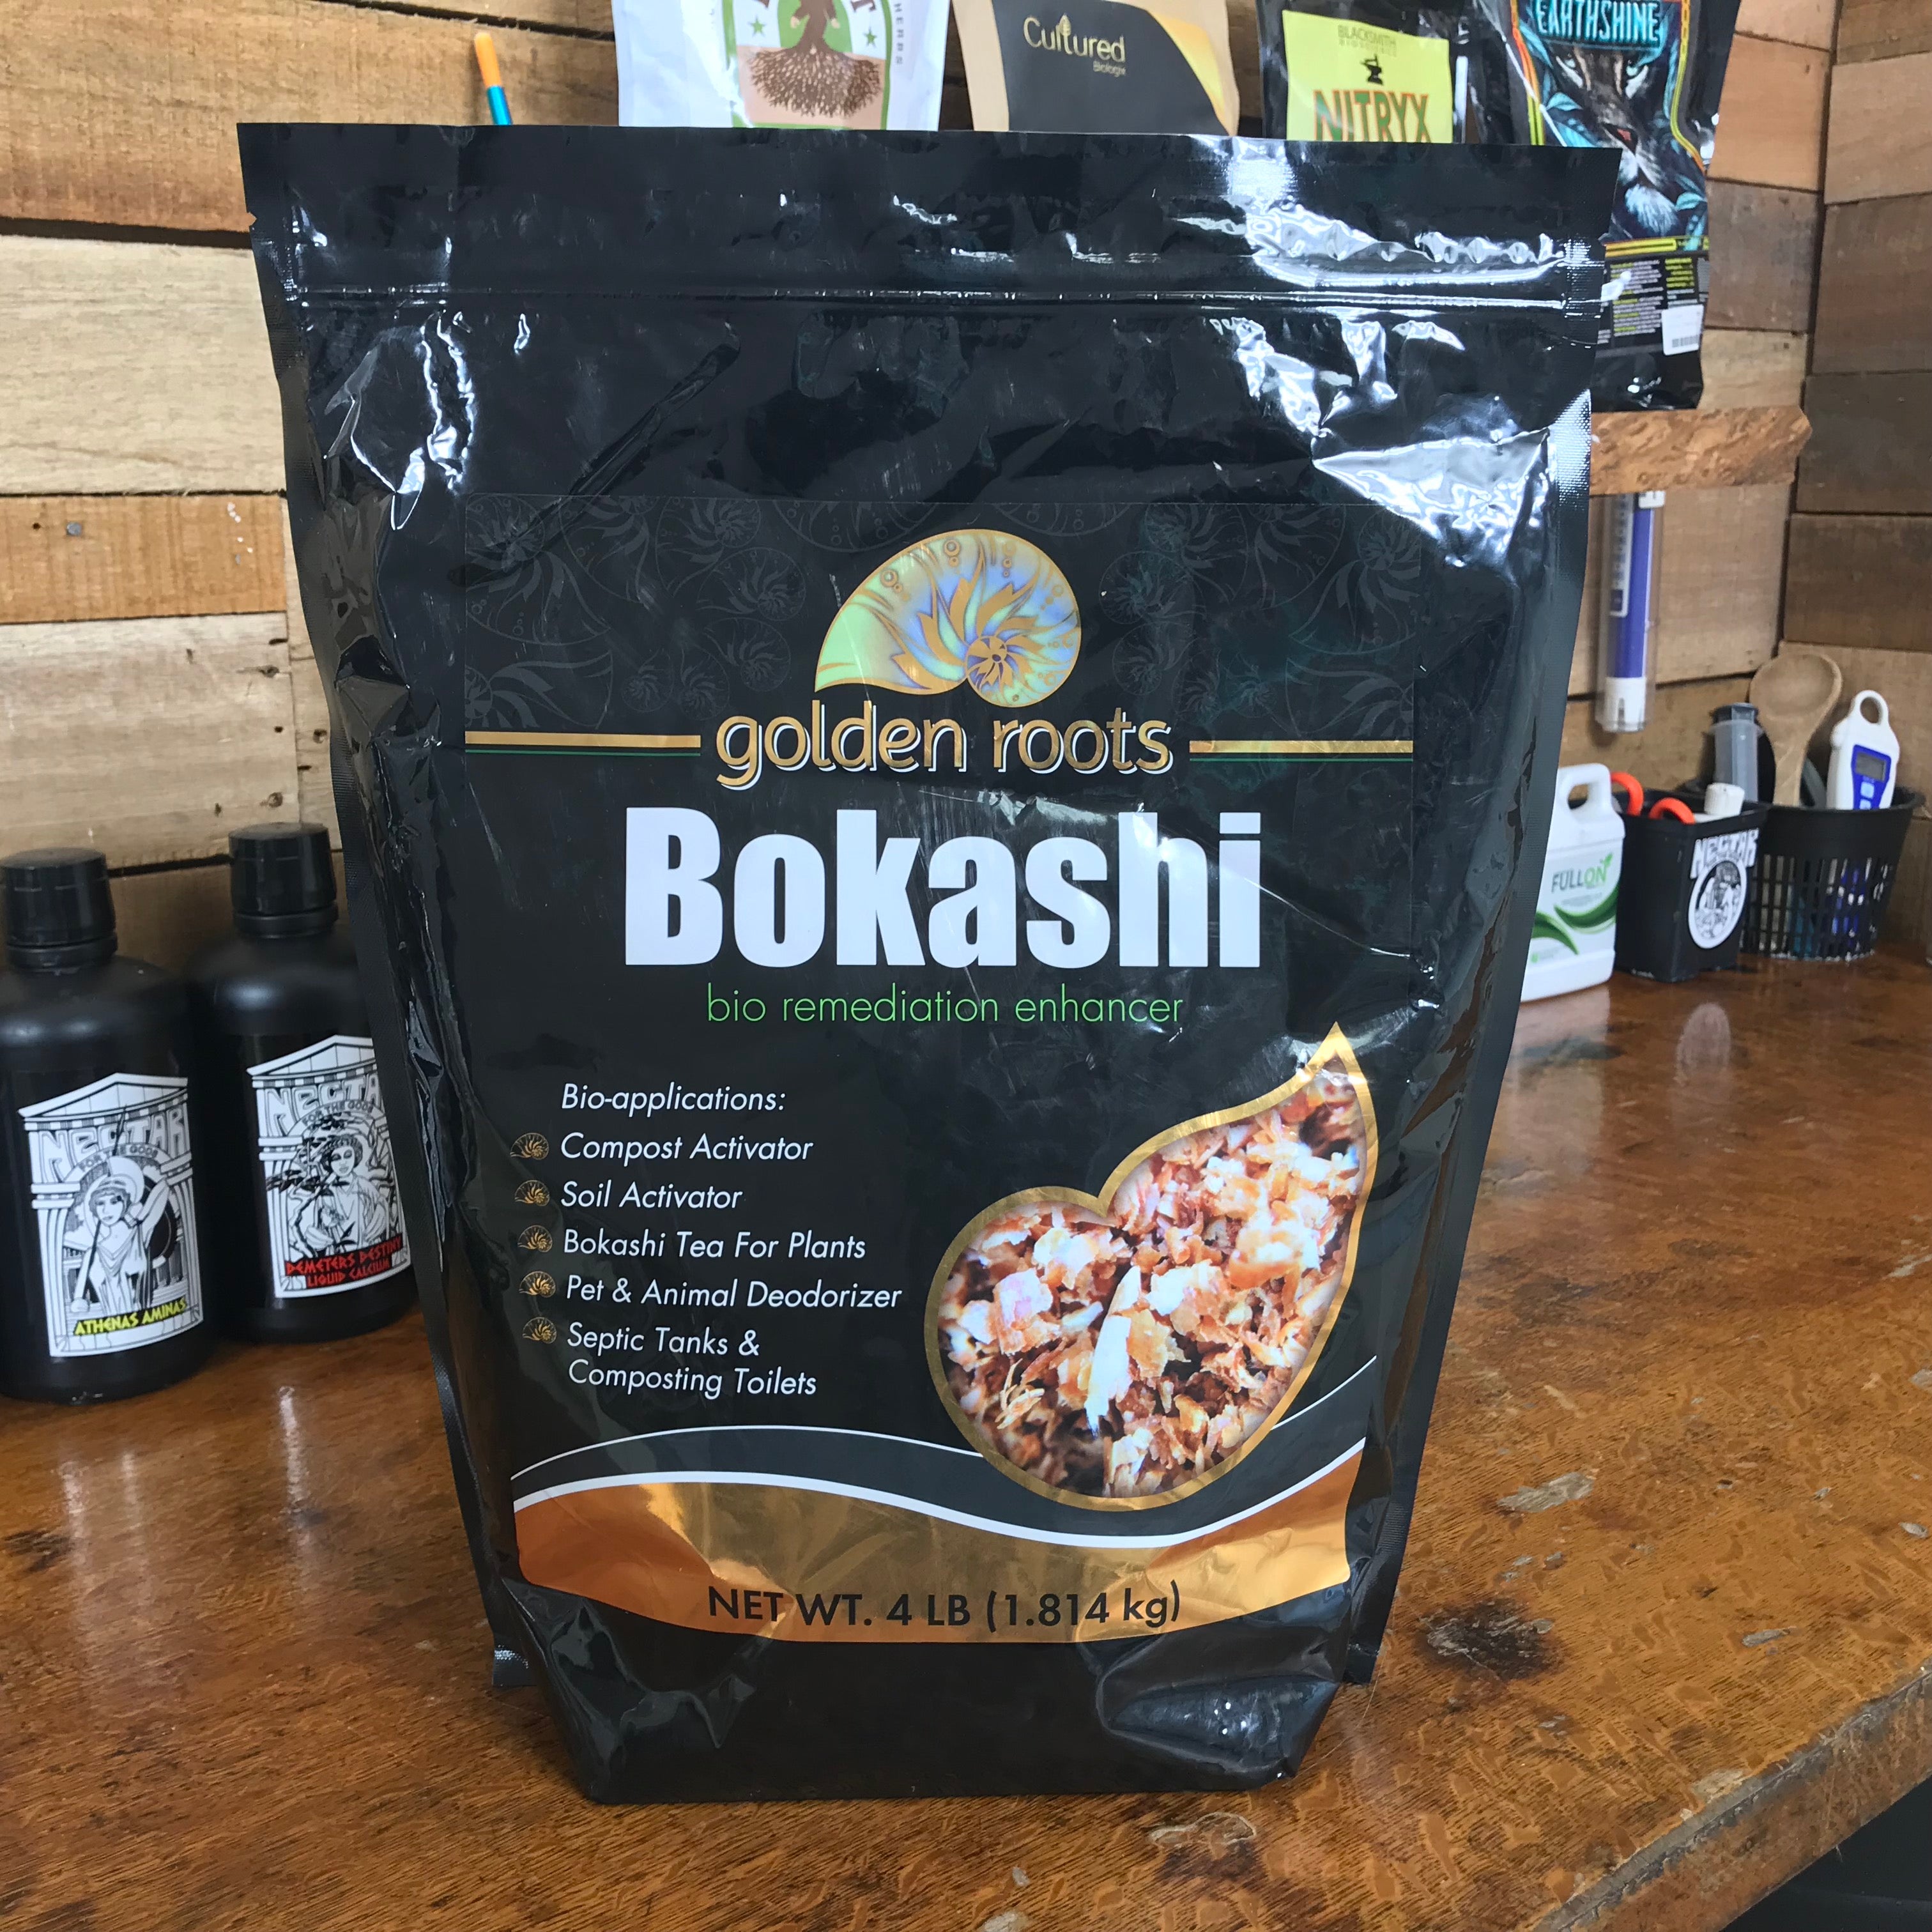 How to use bokashi liquid for plants?